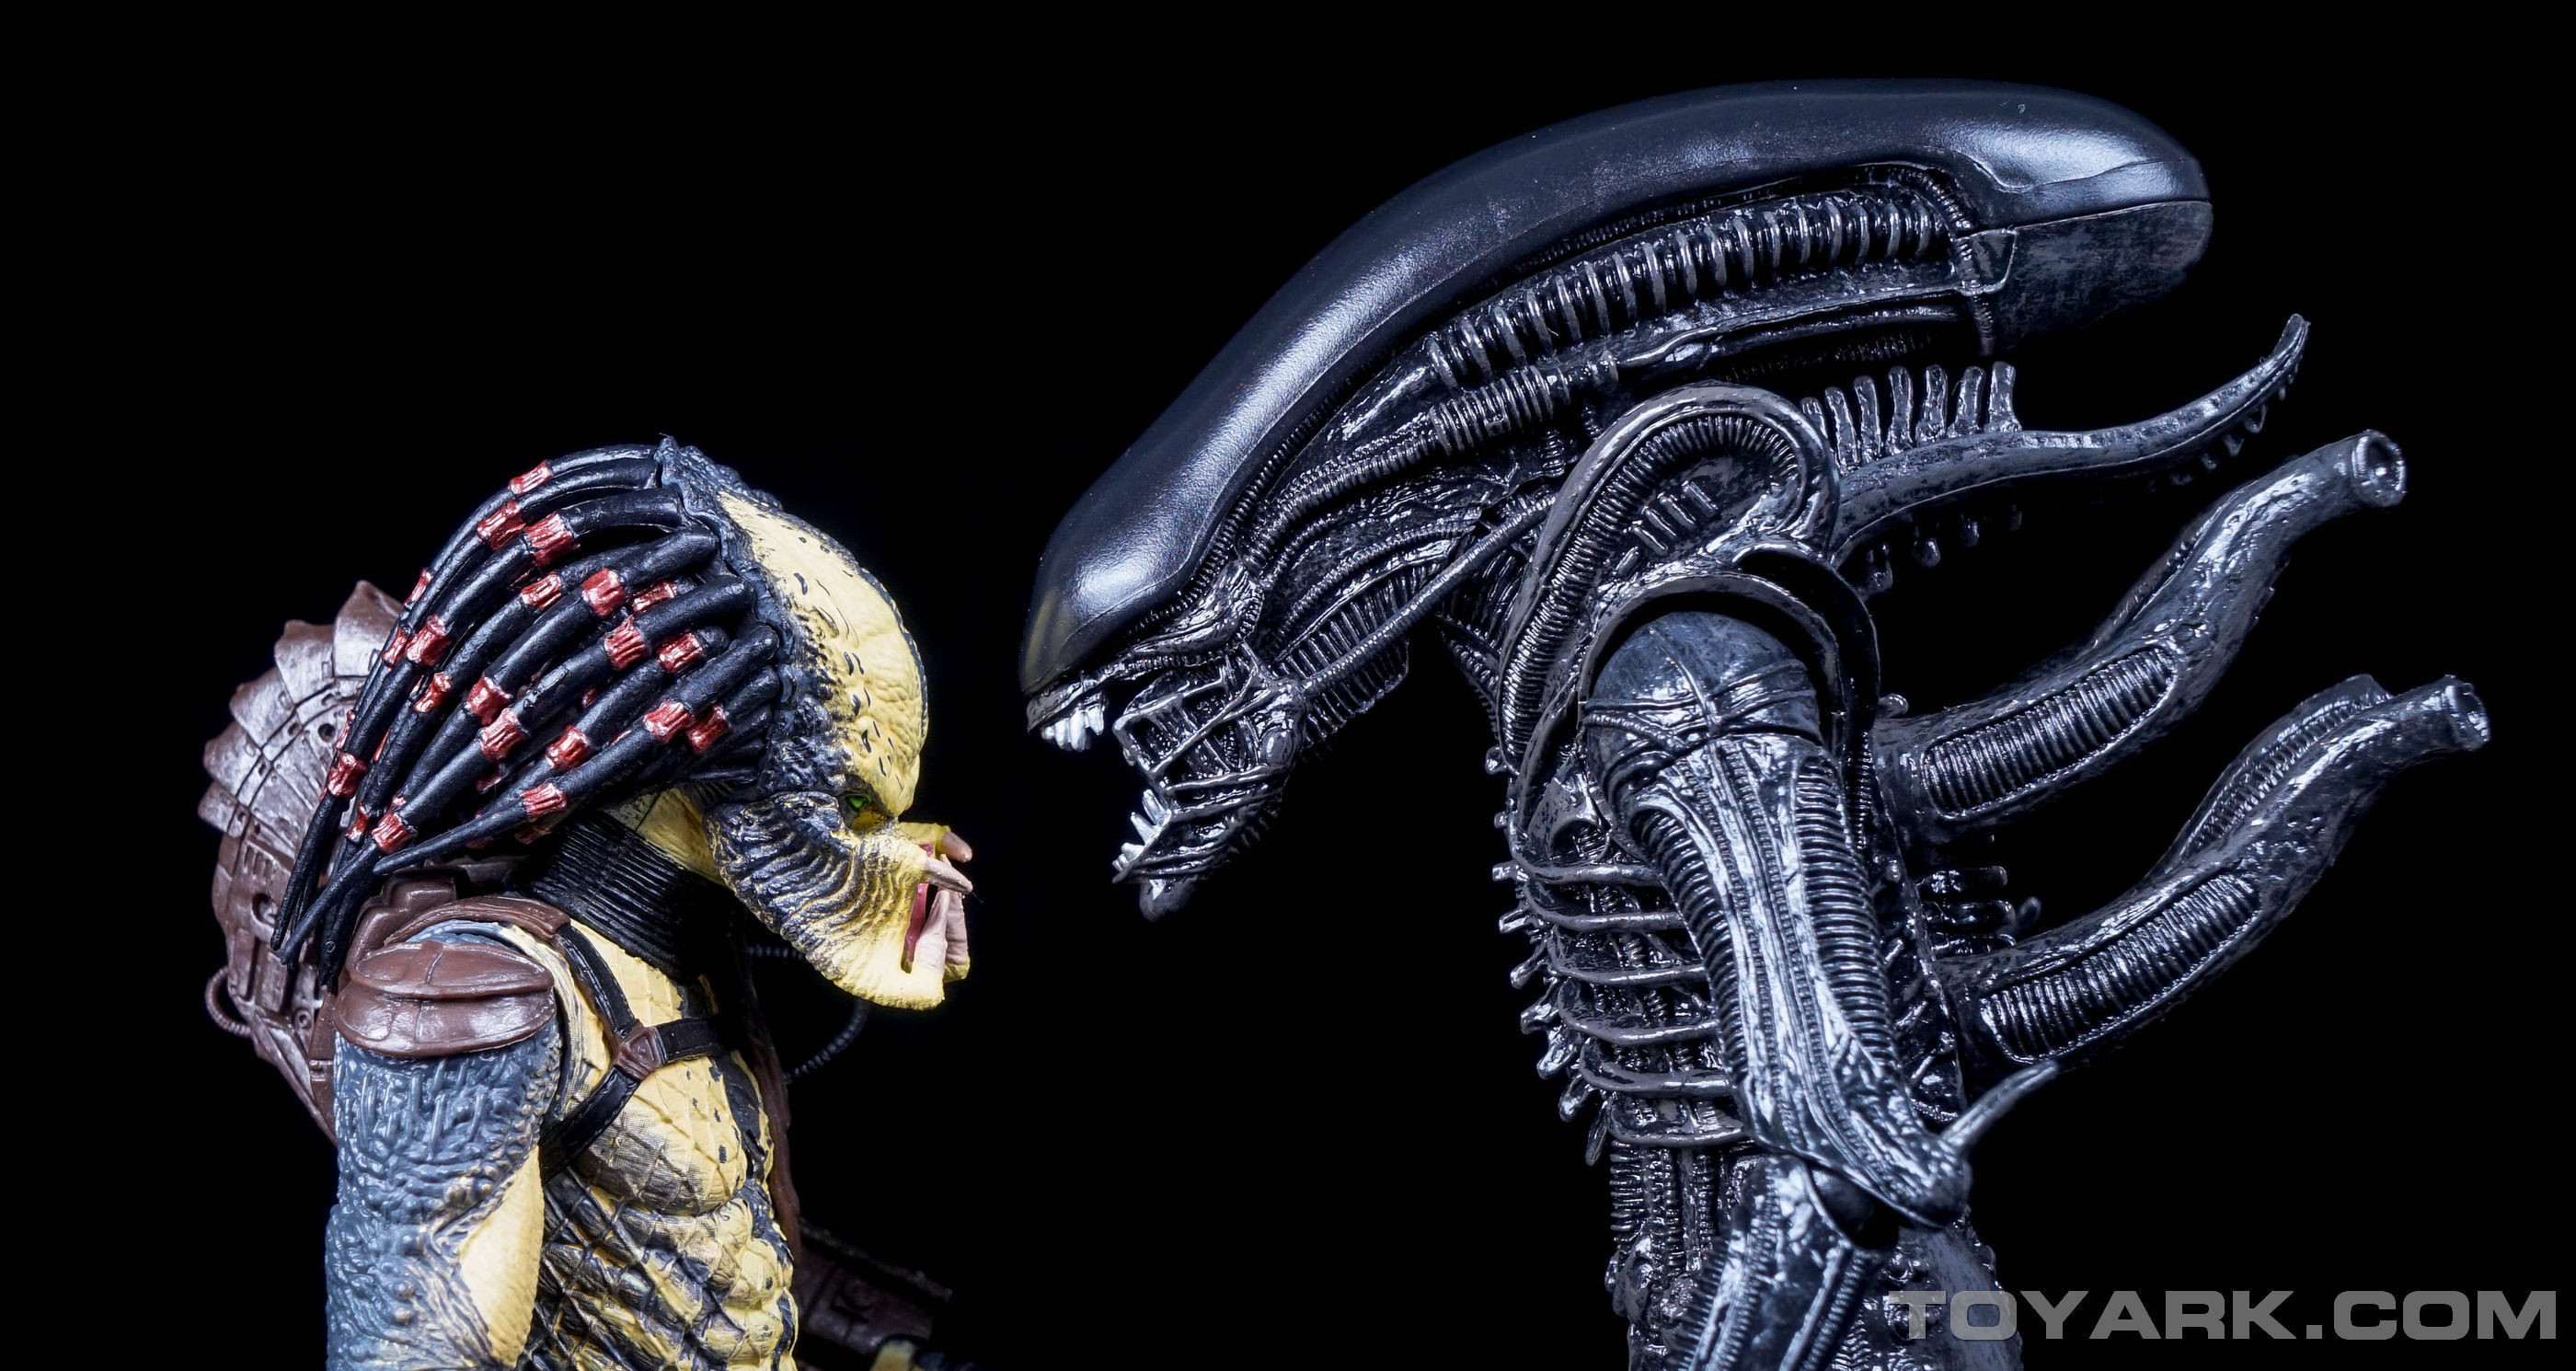 2800x1490 Aliens vs predator wallpapervertical aliens predator wallpaper